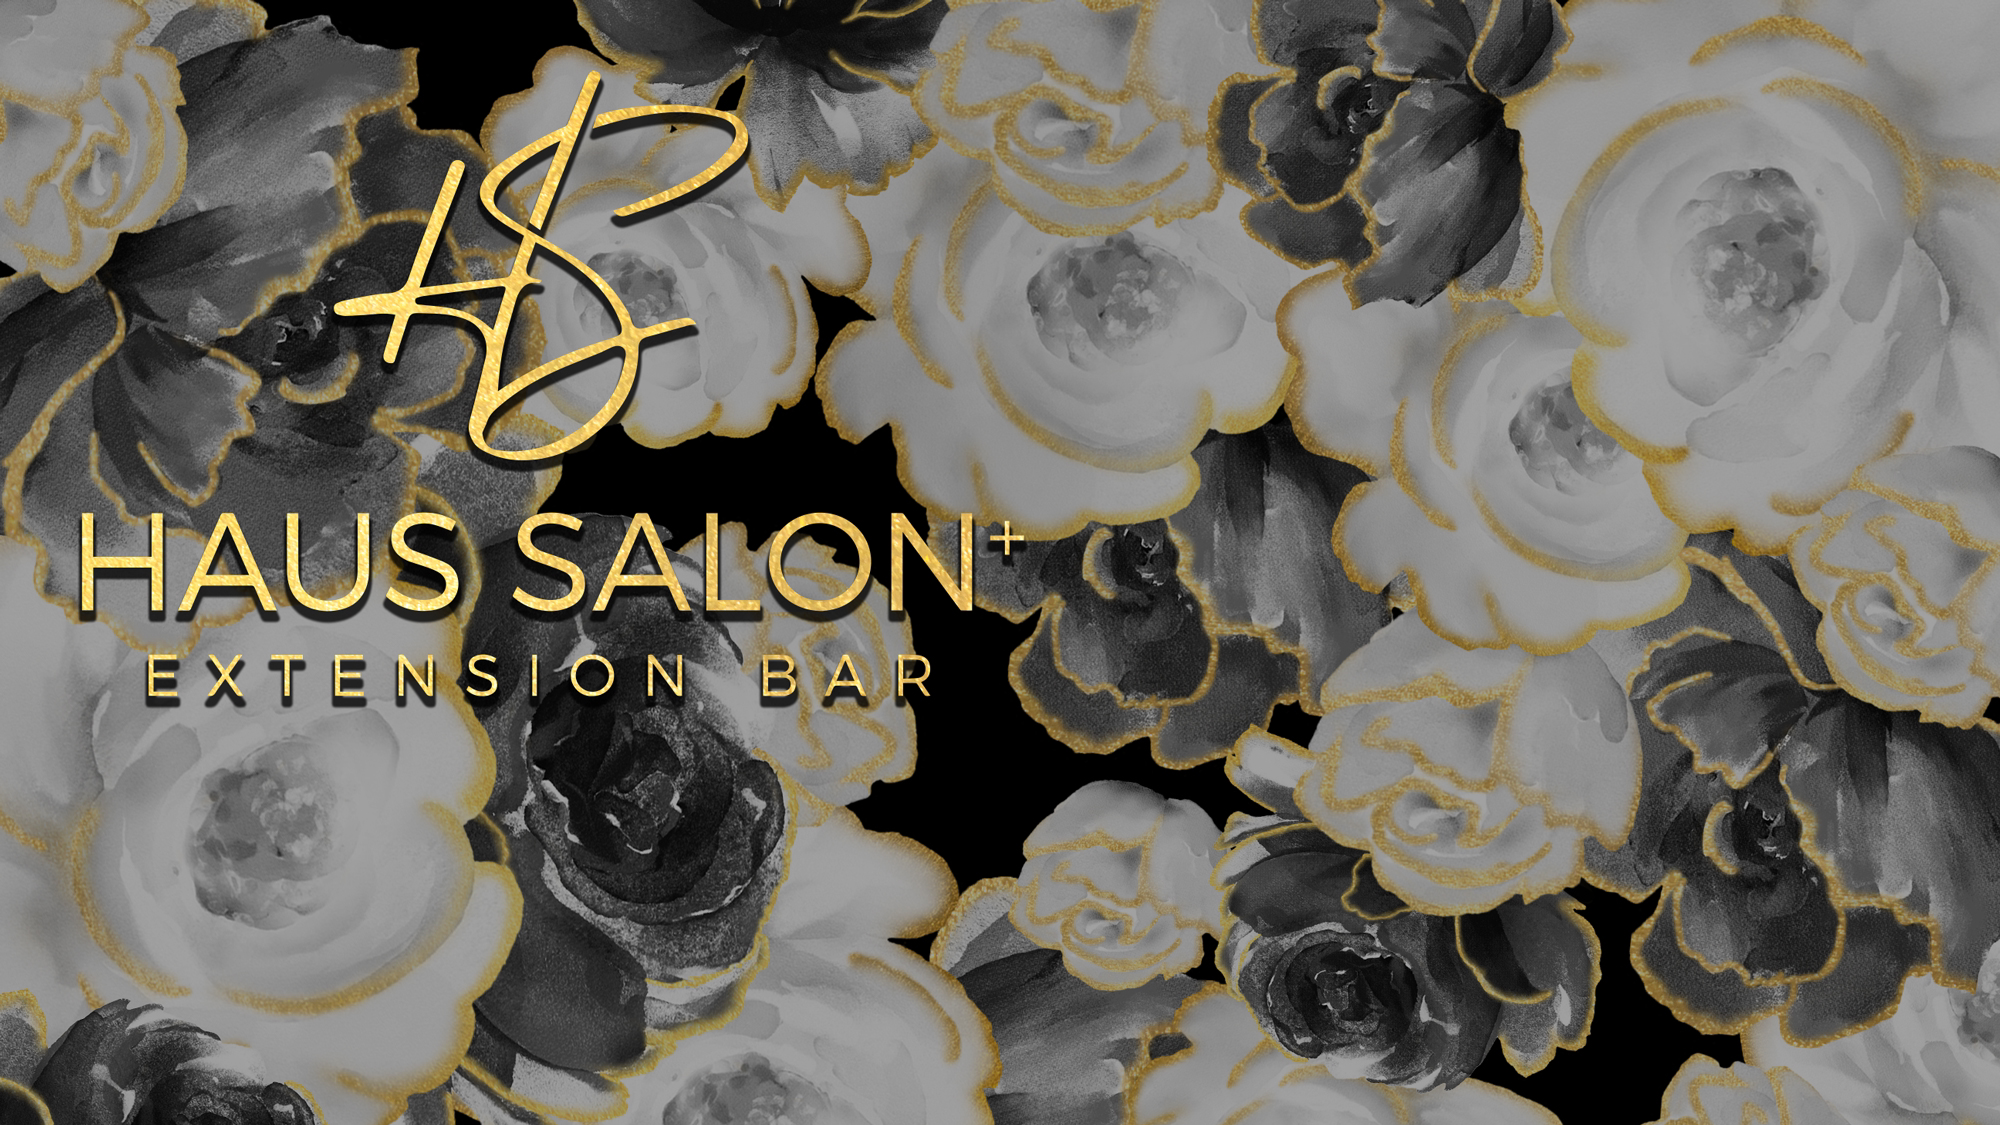 Haus Salon + Extension Bar